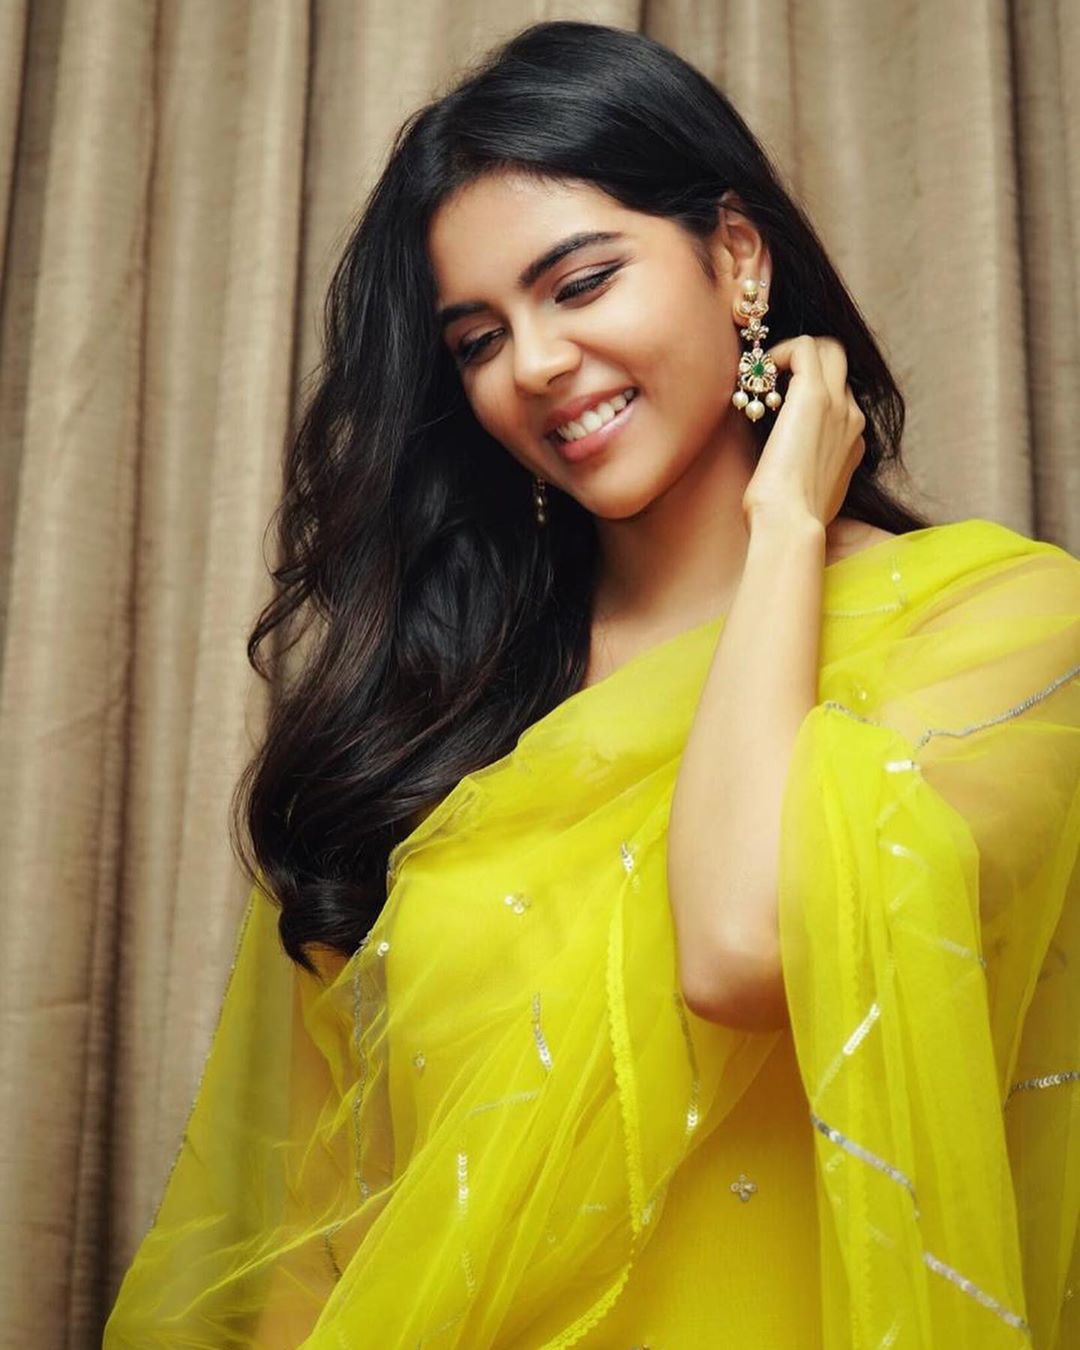 Kalyani Priyadarshan Looking Too Pretty In A Bright Yellow Dress